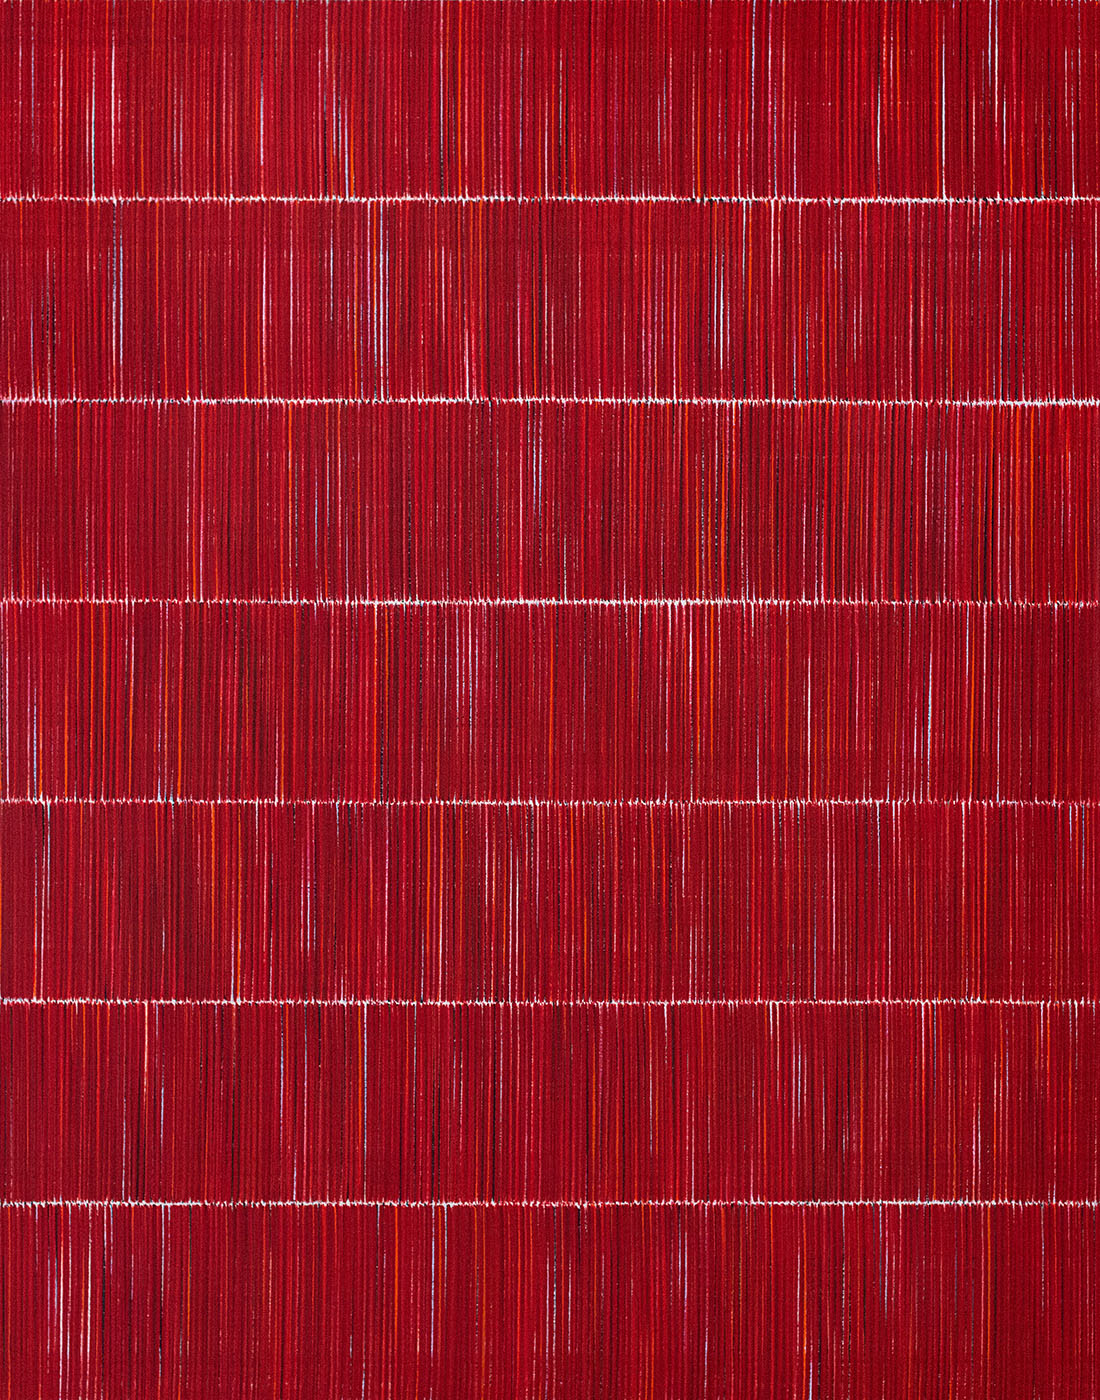 Nikola Dimitrov, KlangRaumRot IV, 2020, Pigmente, Bindemittel auf Leinwand, 140 x 110 cm